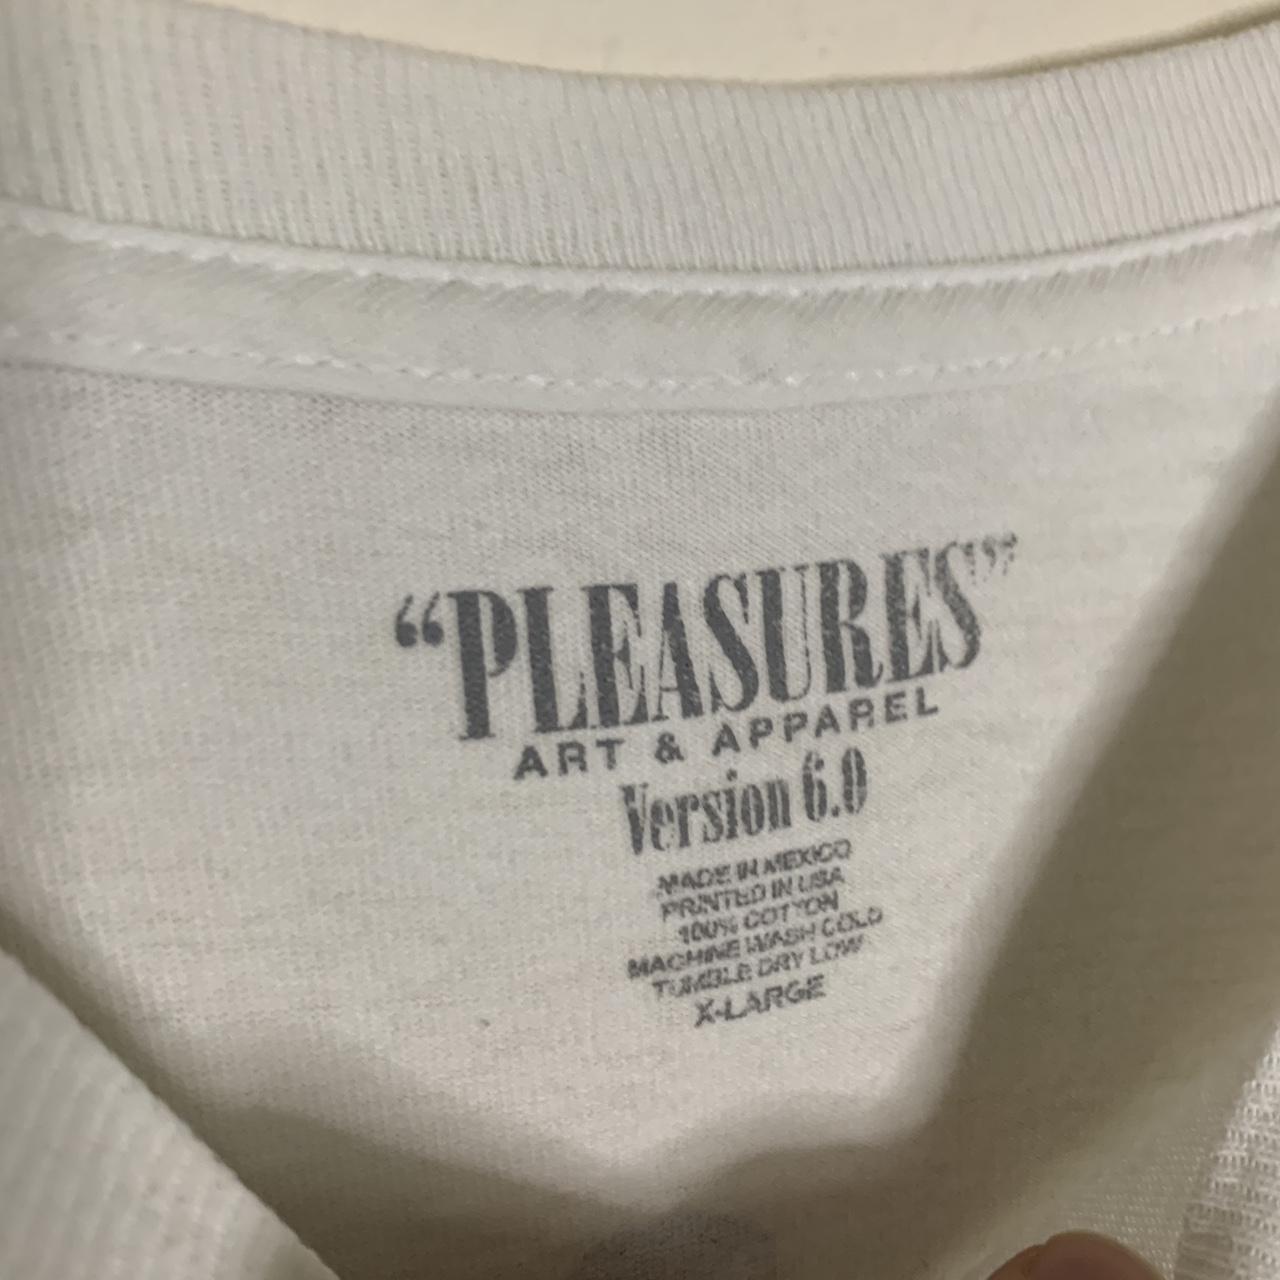 Pleasures Men's White and Black T-shirt (3)